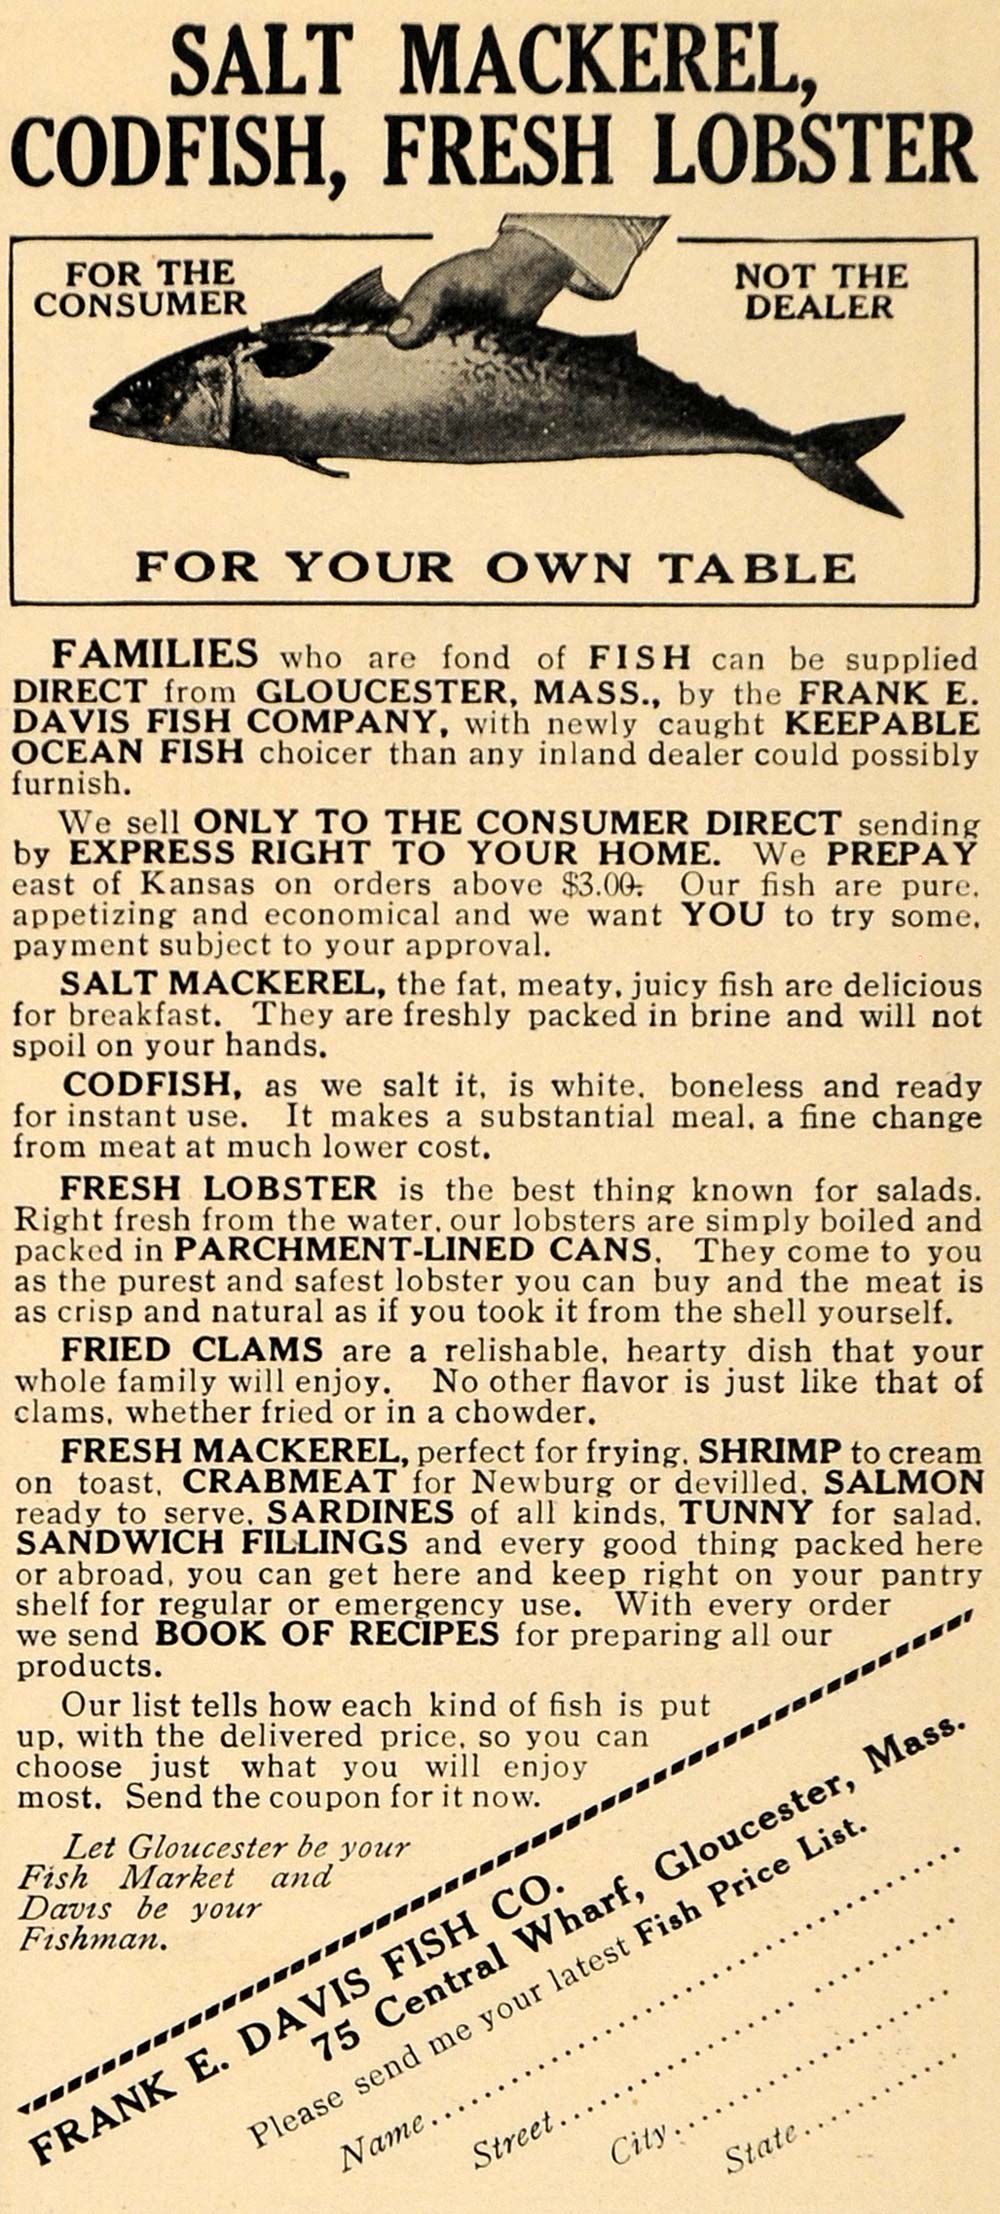 File:Frank E. Davis Fish Company marketing letter, 1928.jpg